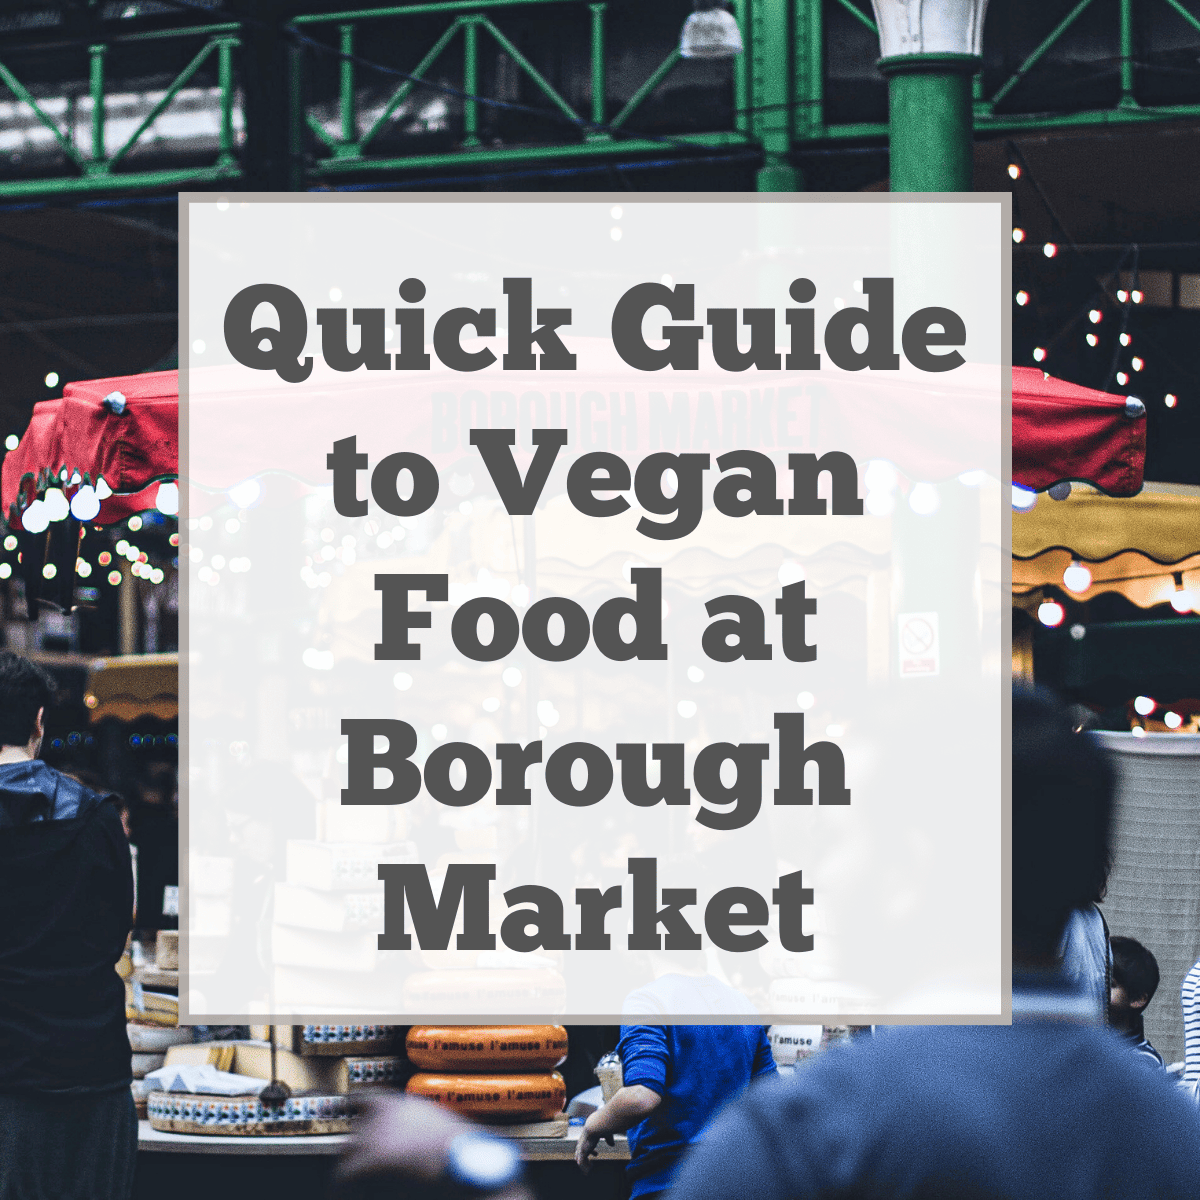 A guide to vegan food at Borough Market.